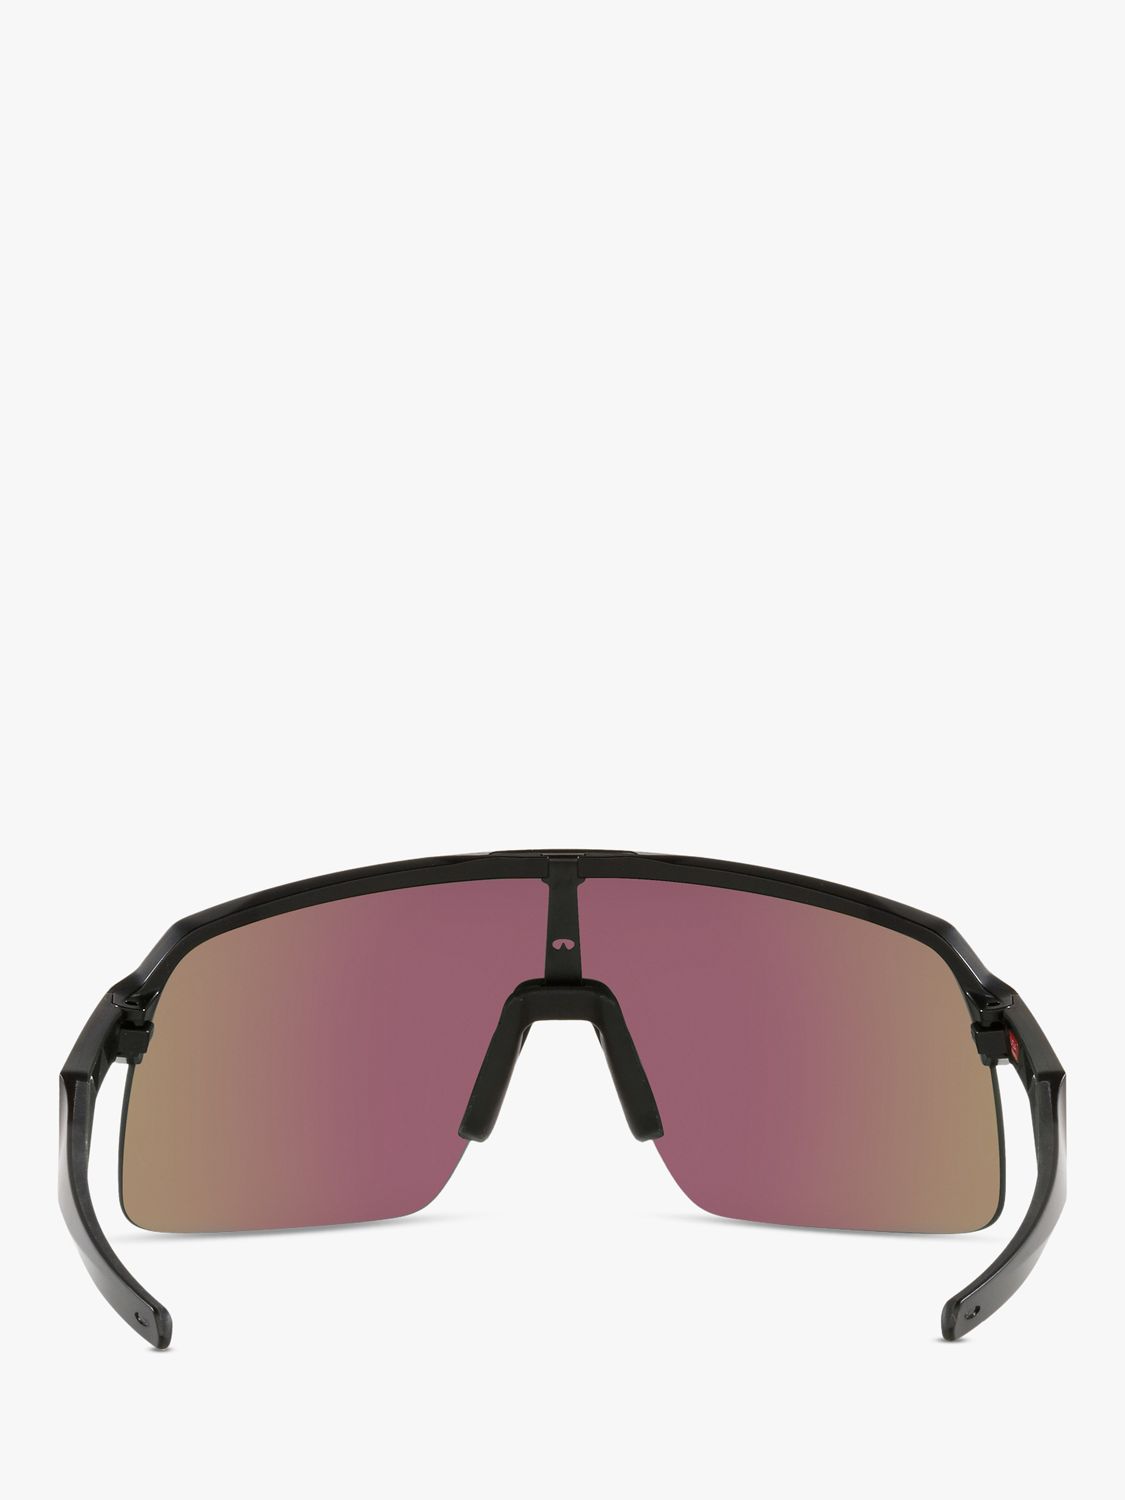 Oakley OO9463 Men's Sutro Lite Prizm Rectangular Sunglasses, Matte Black/Mirror Blue